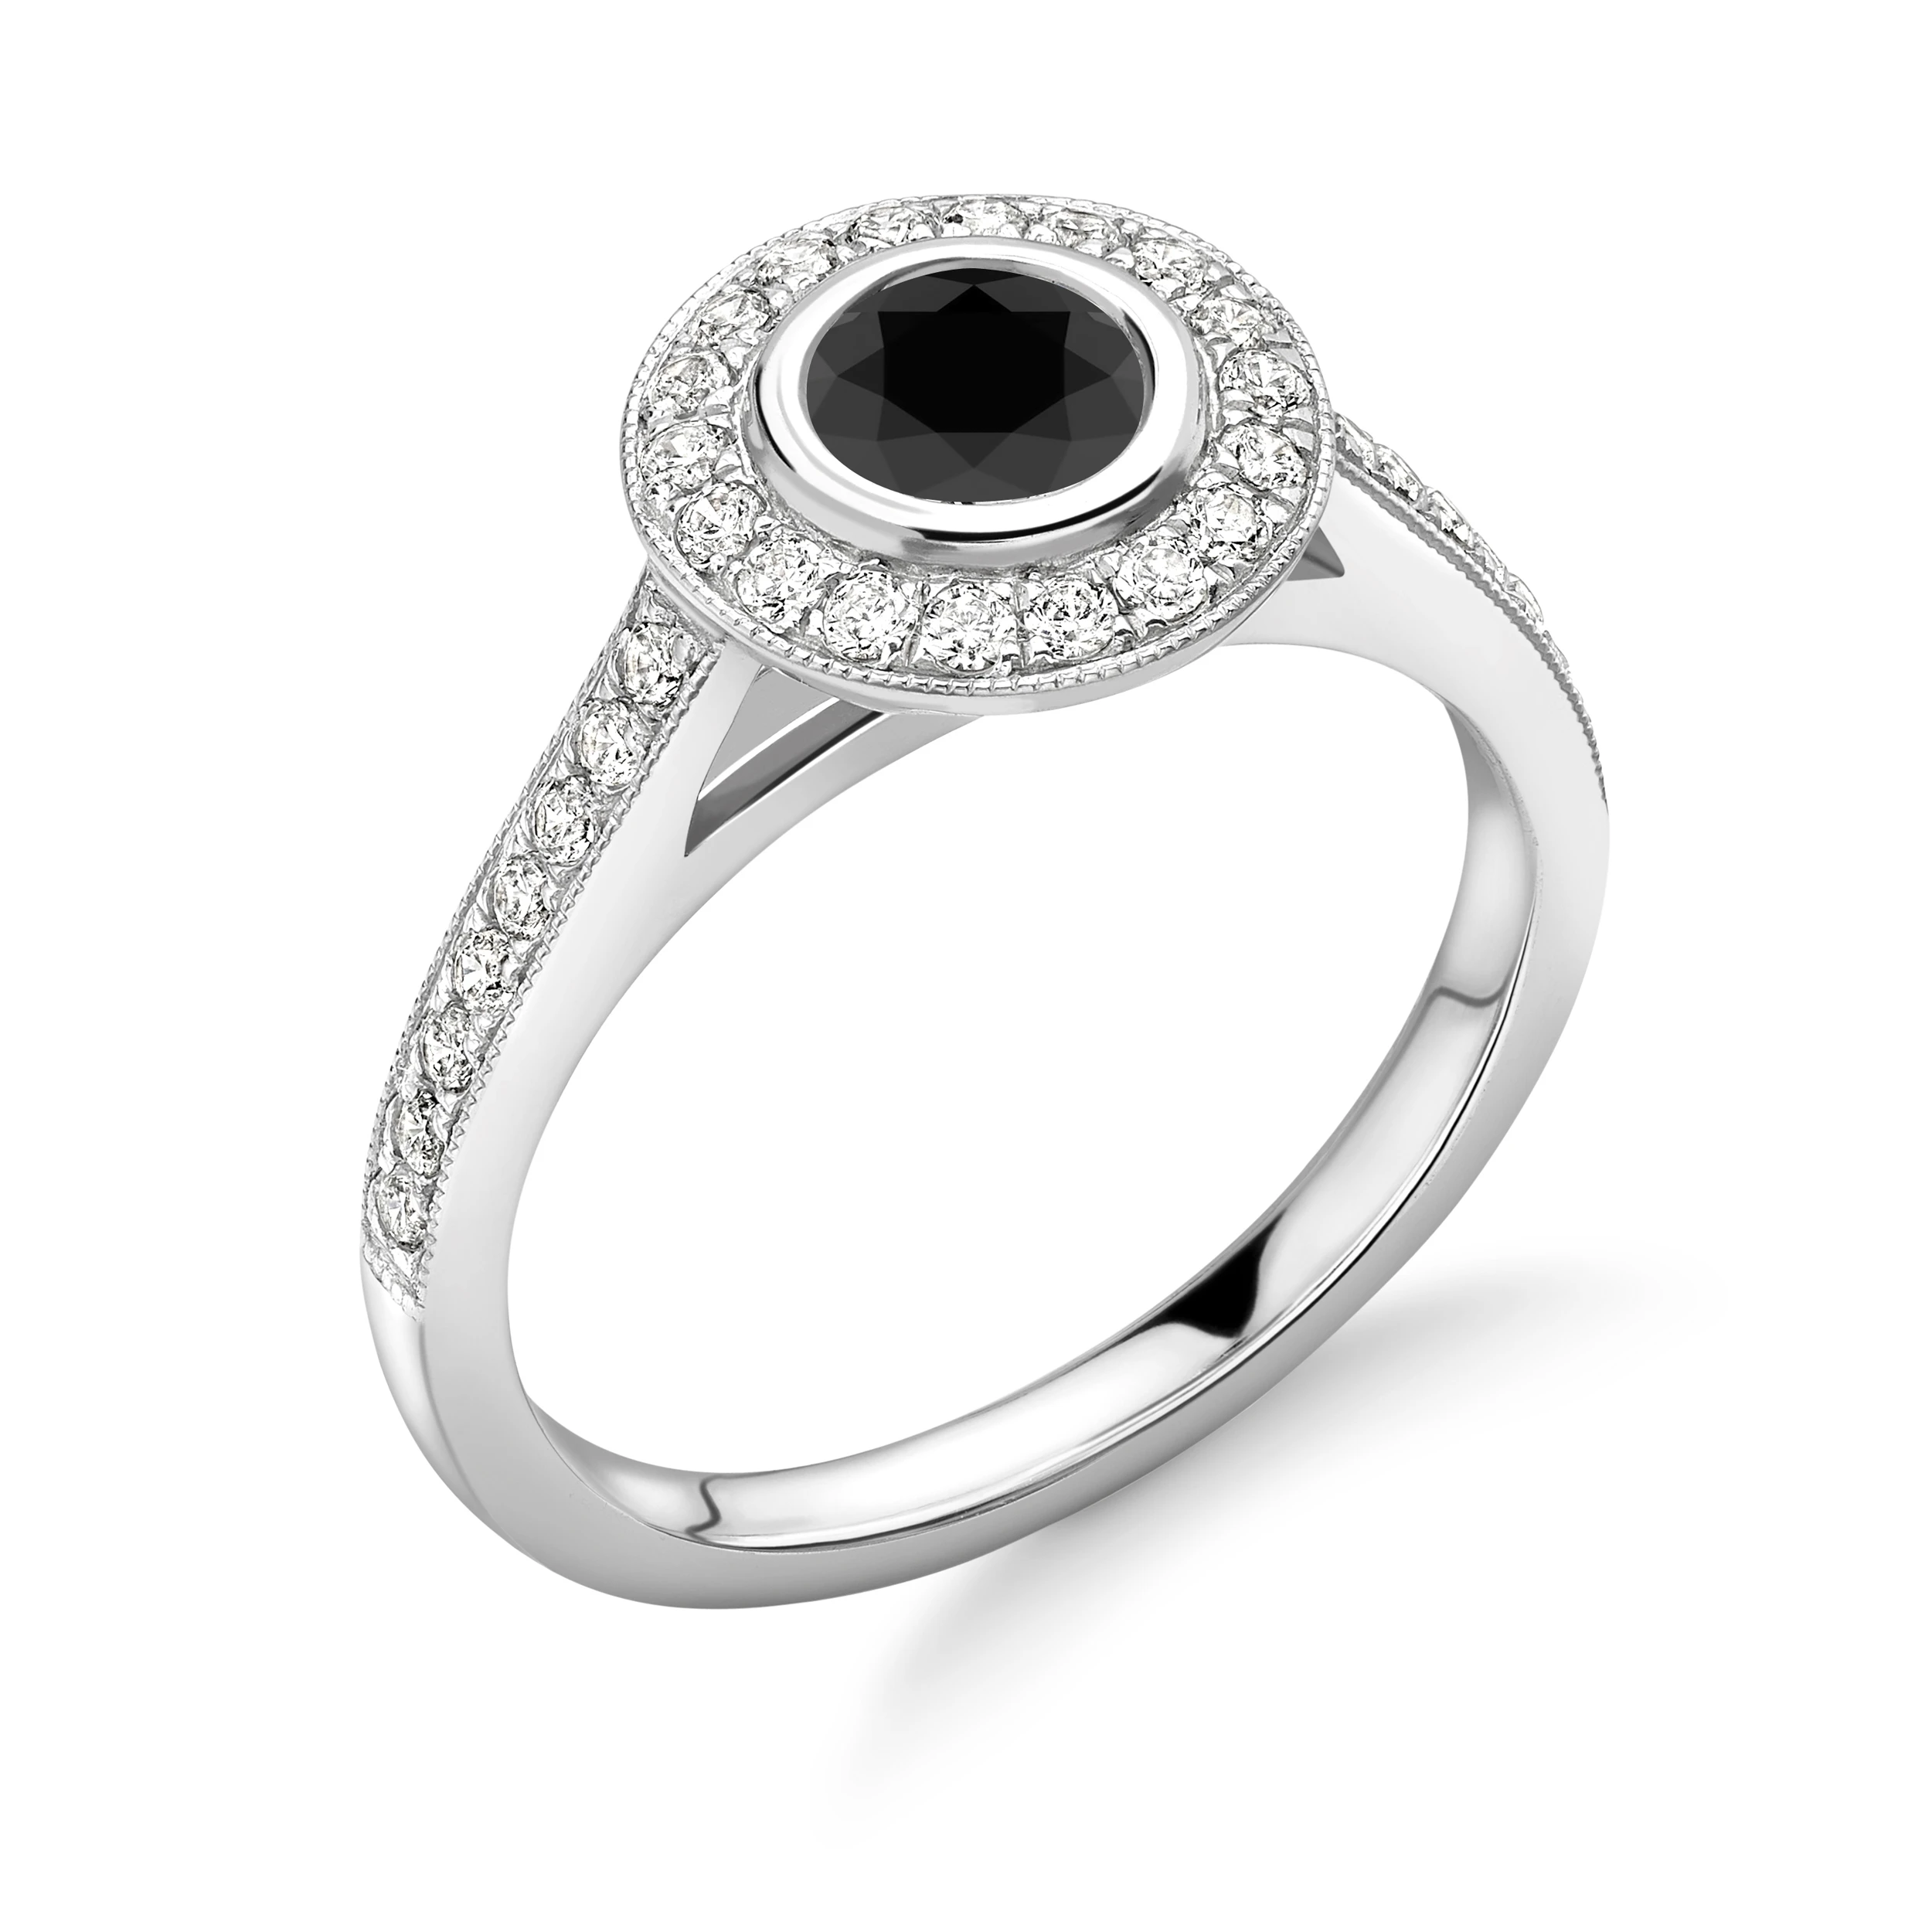 Bezel Setting With Miligrain Edge Halo Engagement Ring With Black Diamond